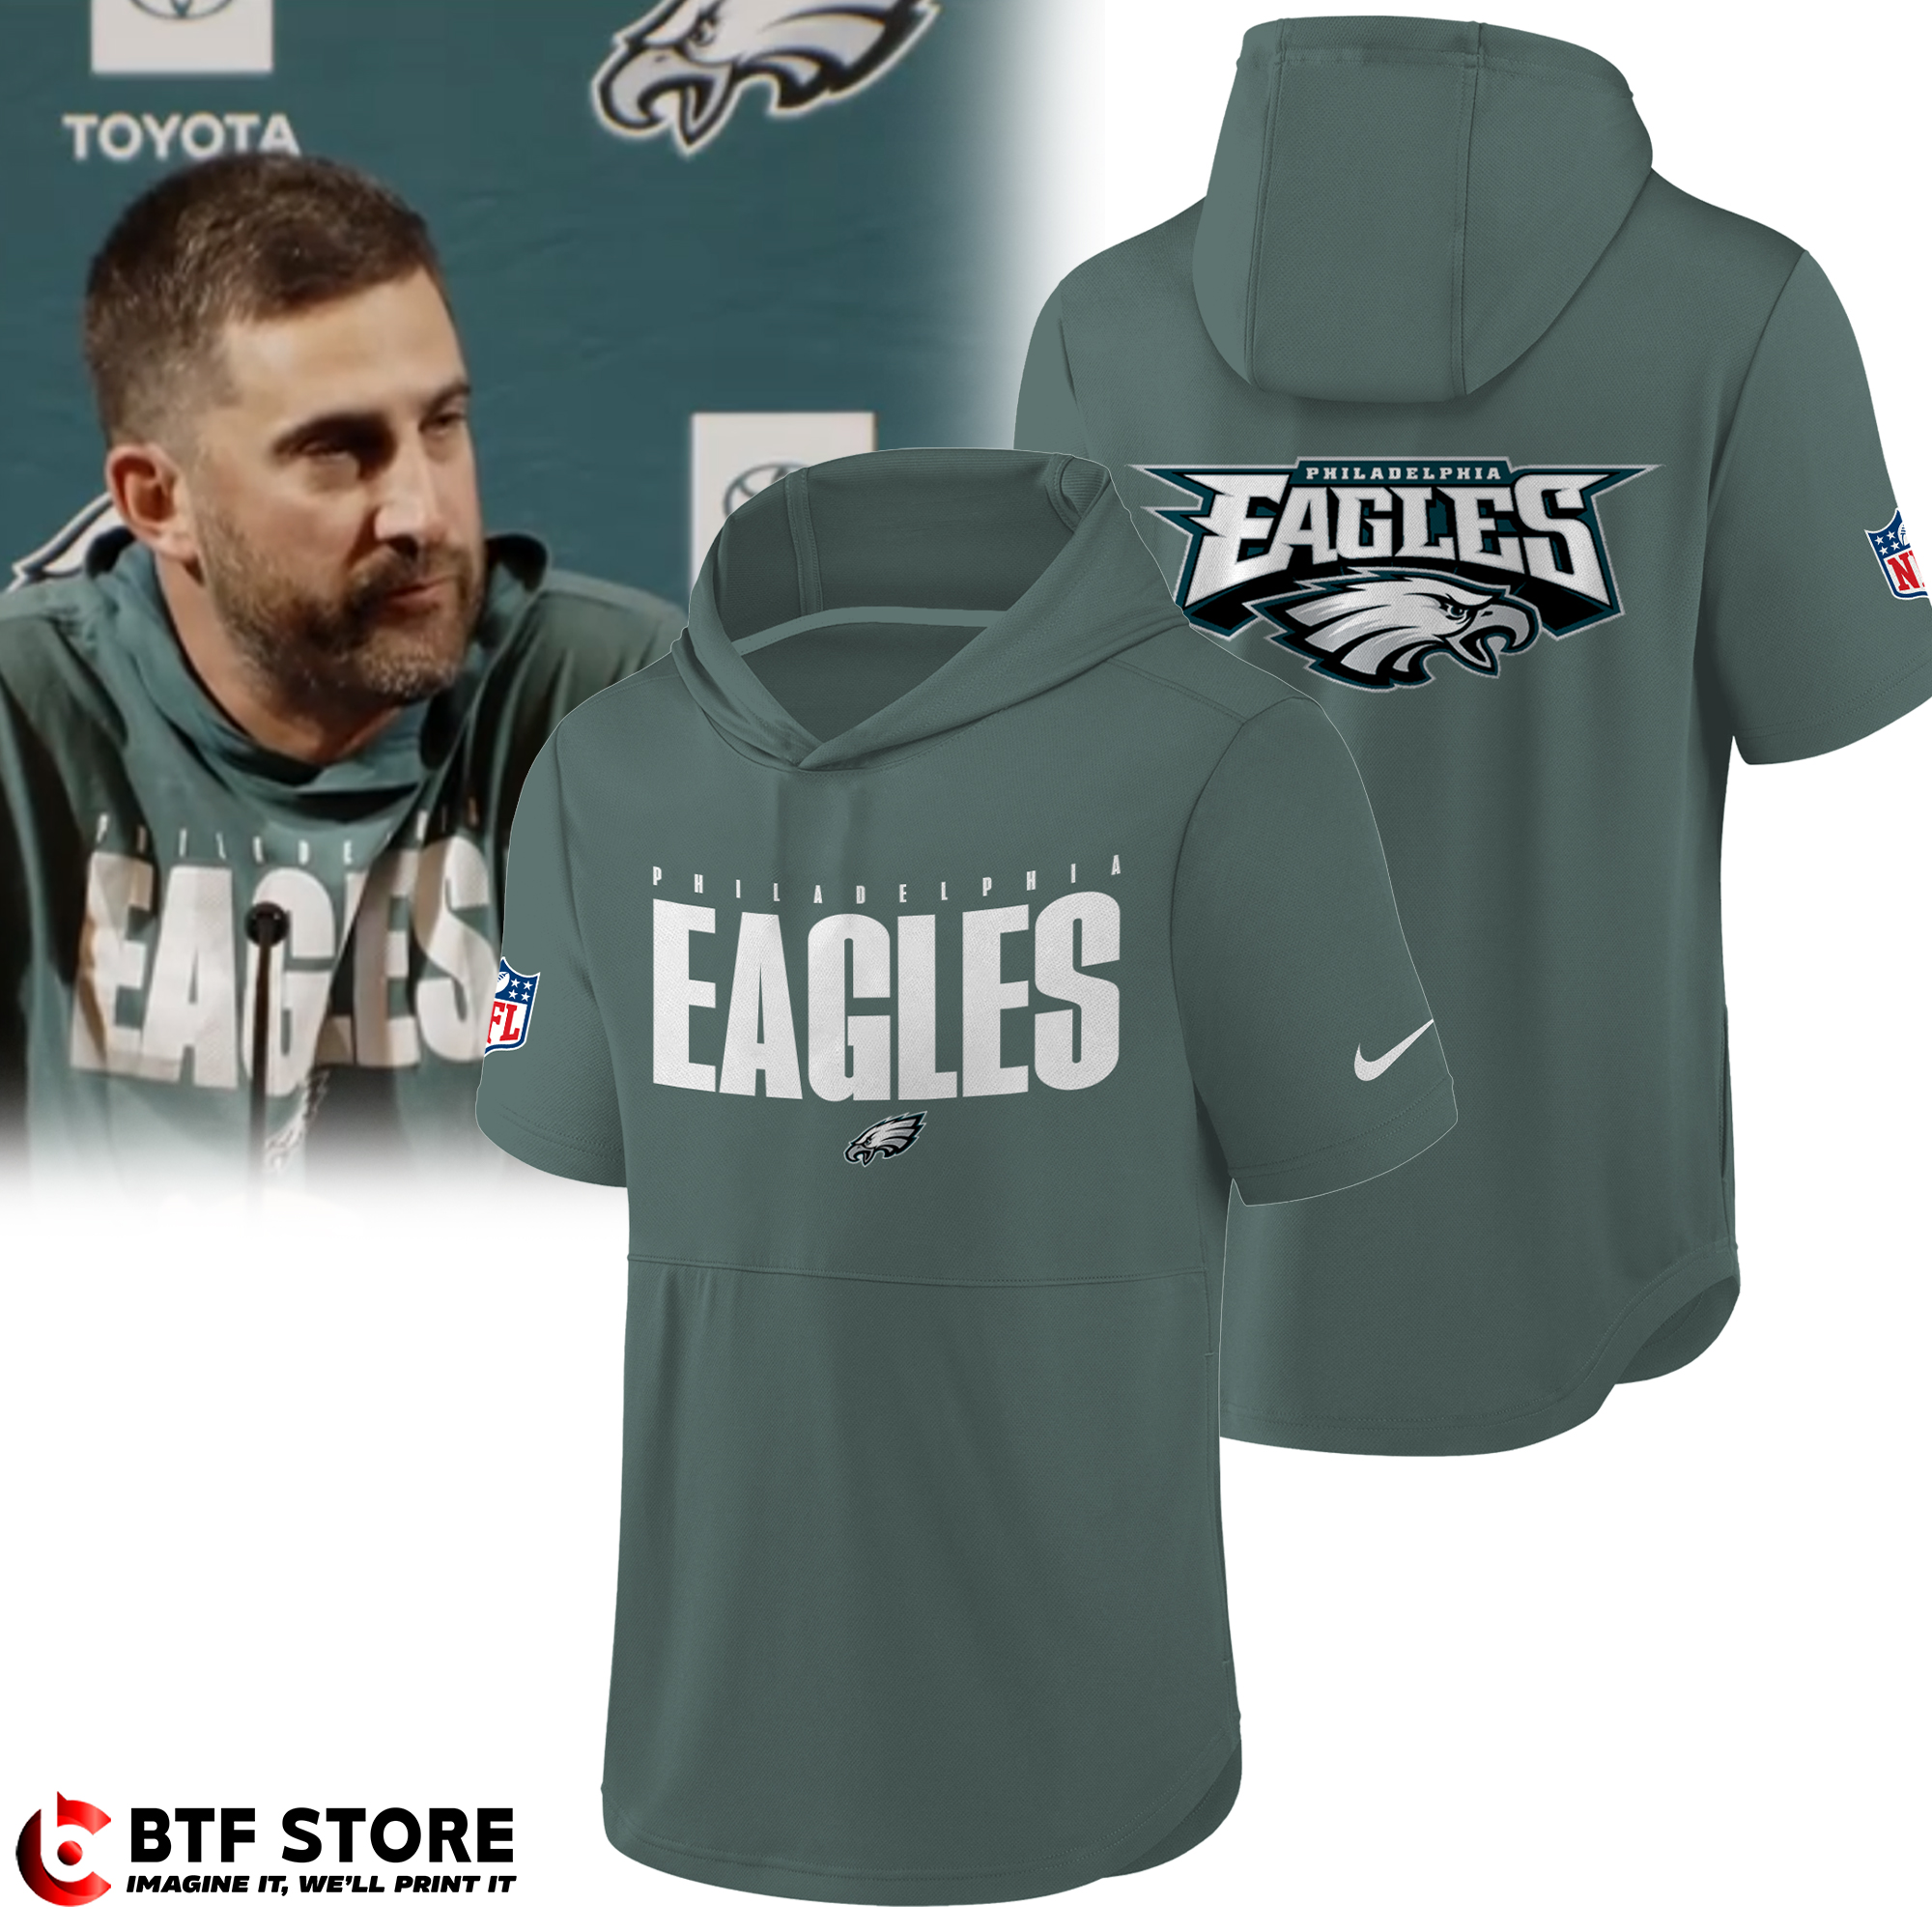 Philadelphia Eagles Jersey new - BTF Store